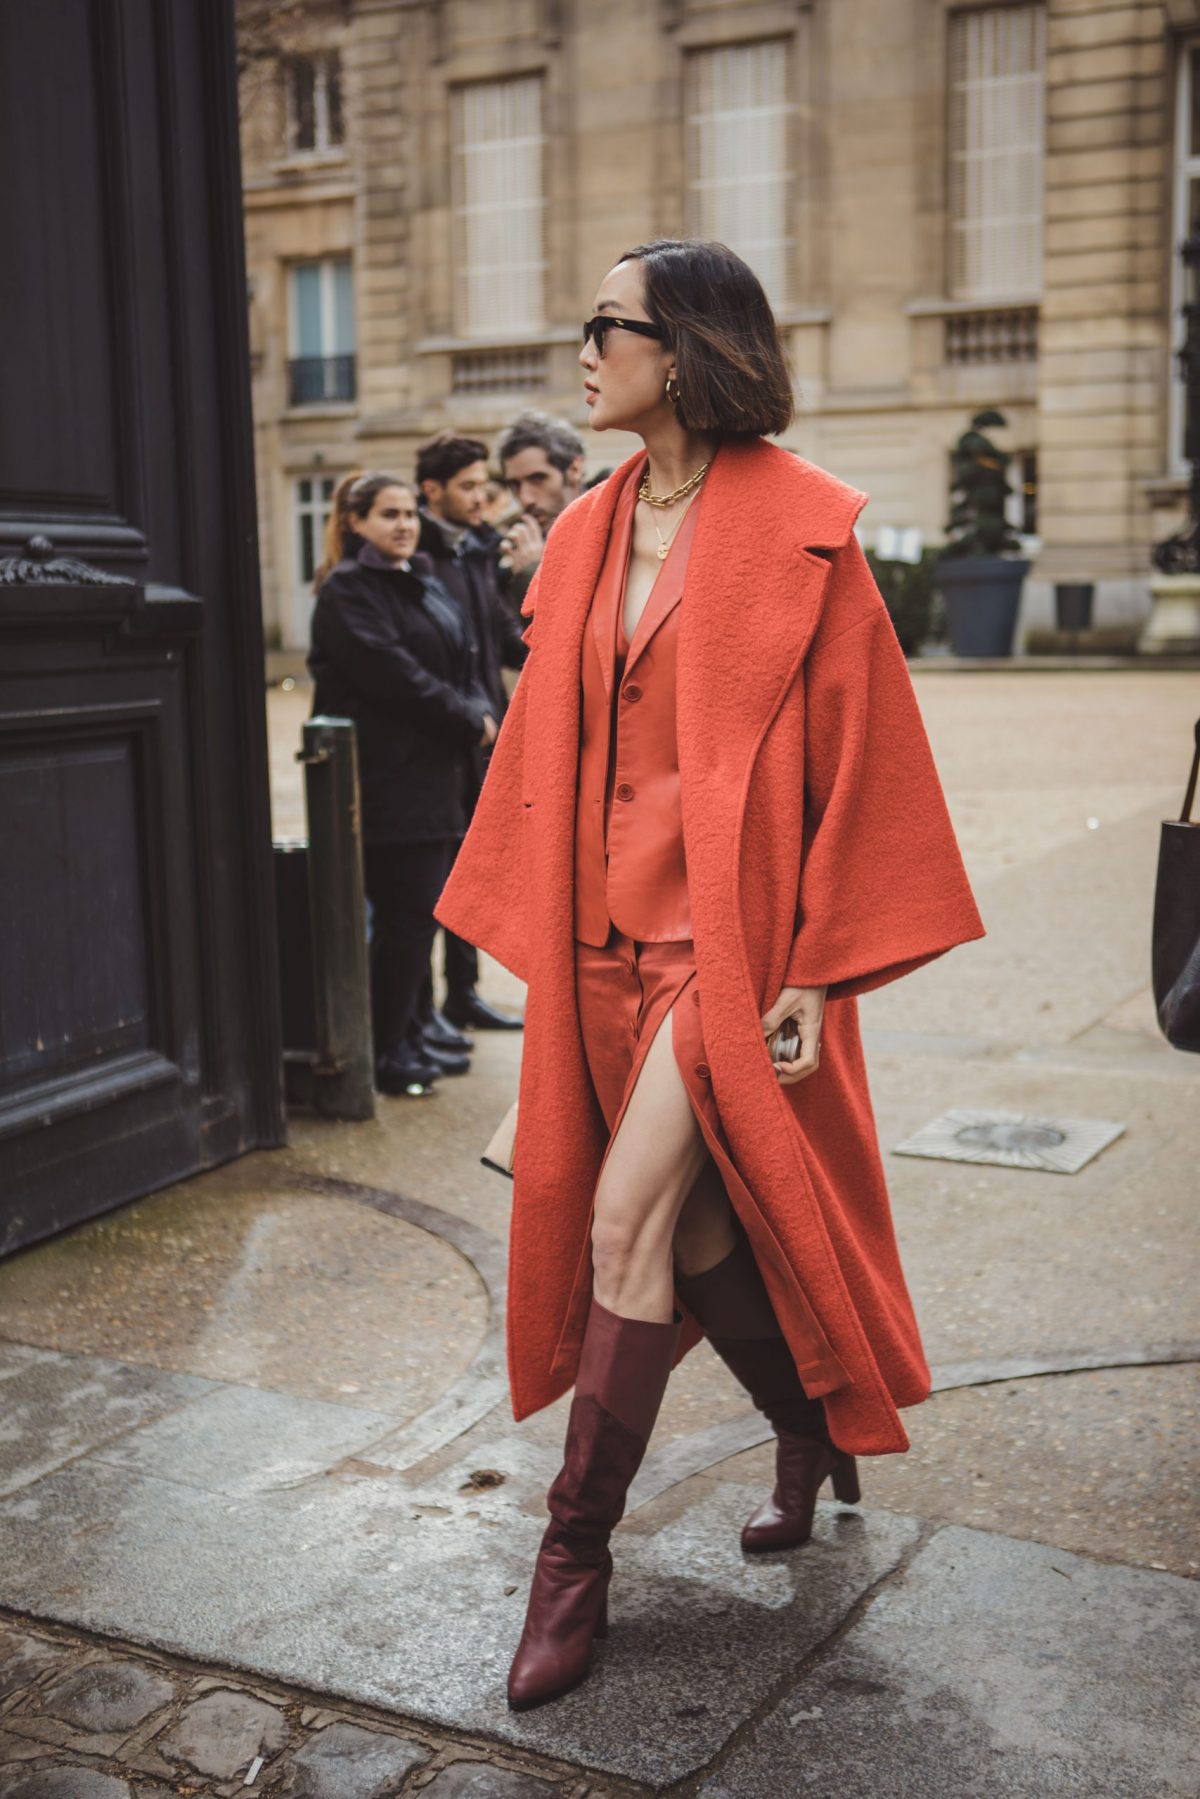 <span class="hot">Hot <i class="fa fa-bolt"></i></span> Street style @ Paris Fashion Week |vi | Pfw |